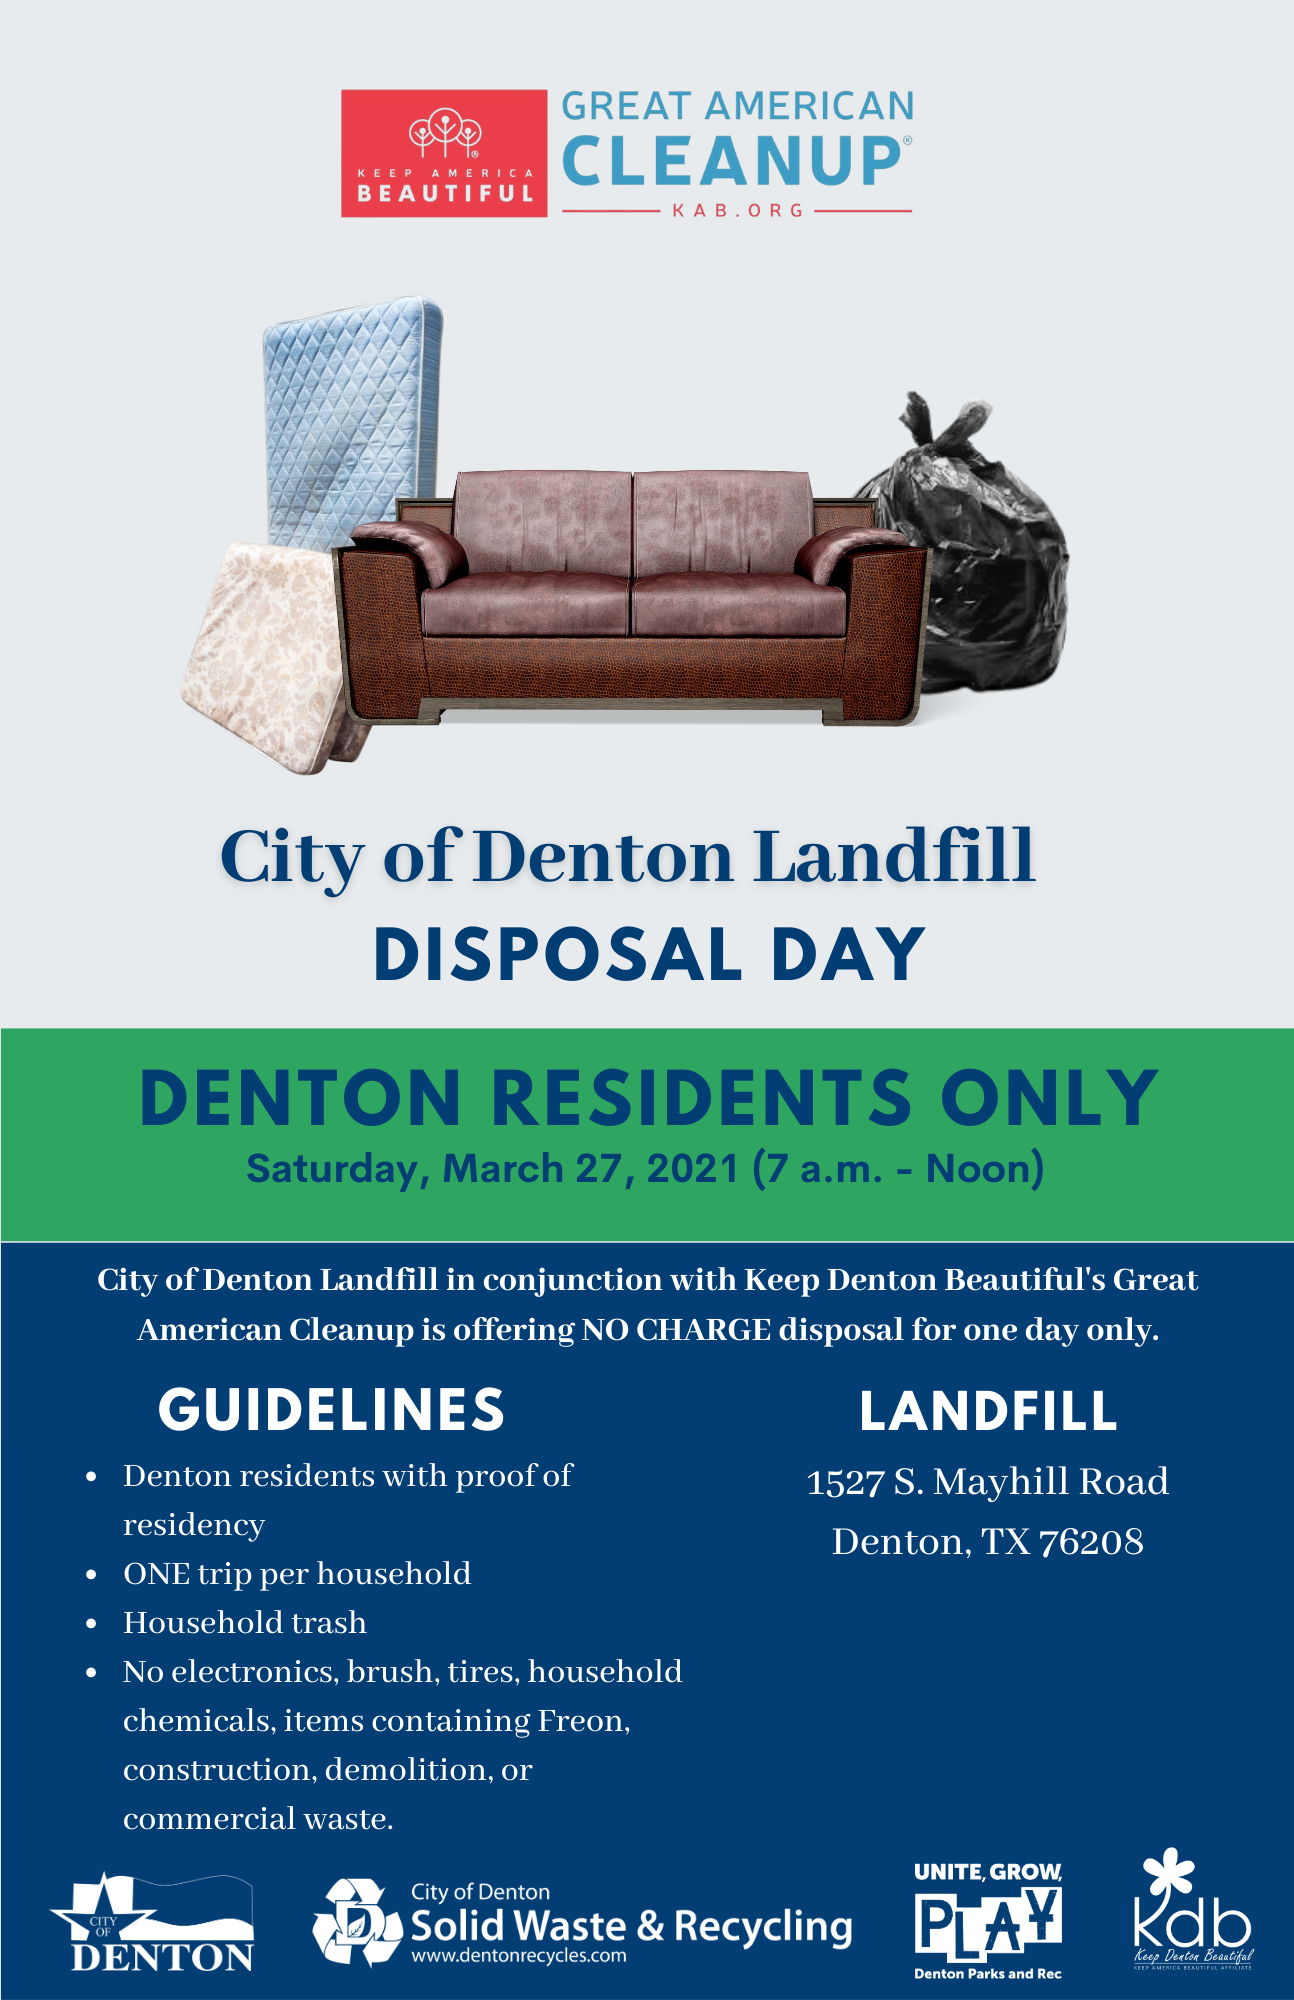 Disposal Day at the City of Denton Landfill. (City of Denton Solid